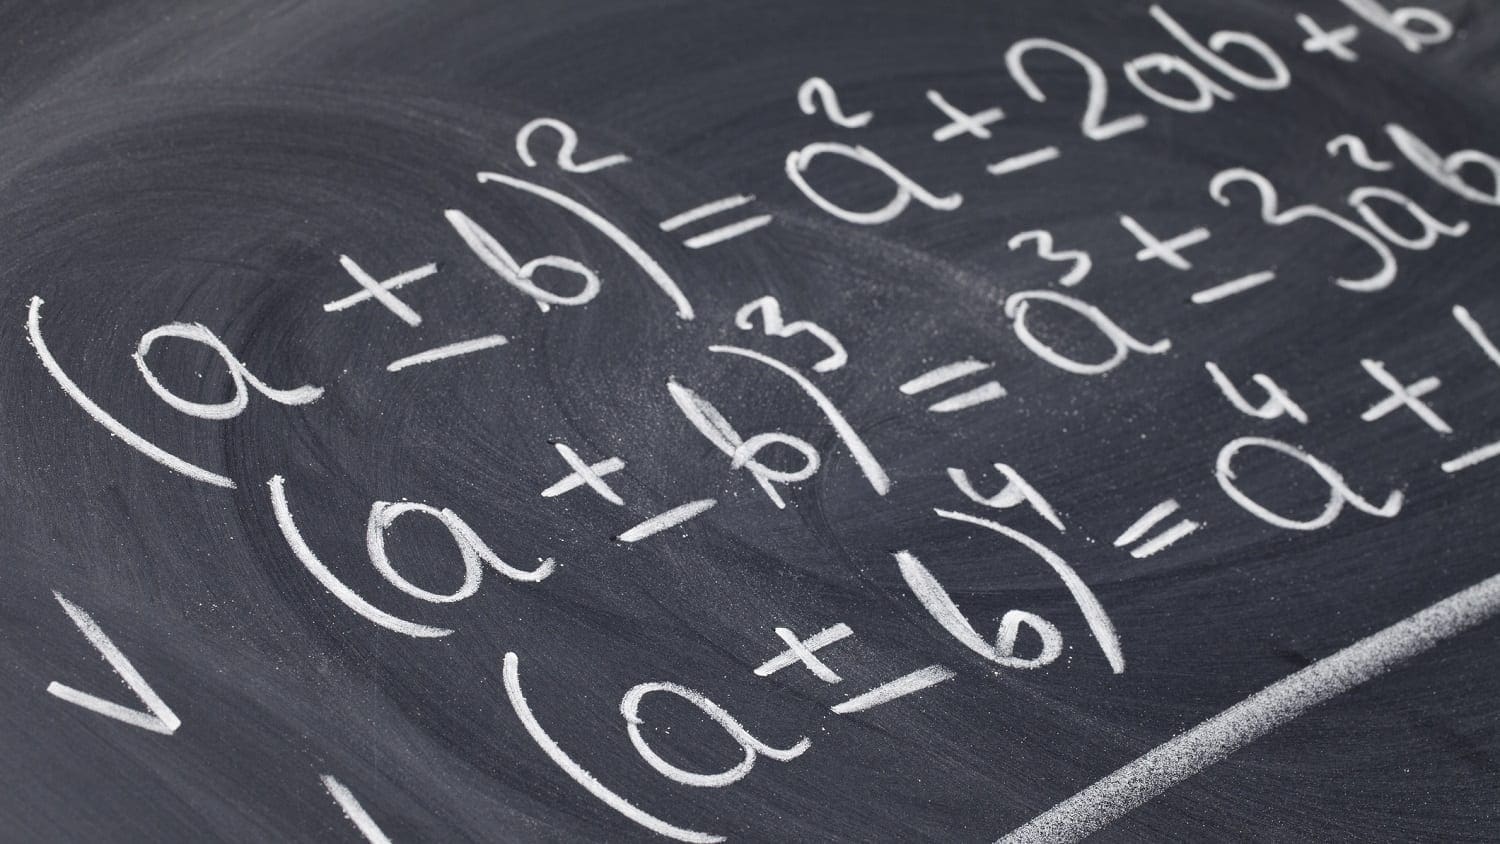 Algebraic equations on a blackboard: Photo 20838970 © Marek Uliasz | Dreamstime.com